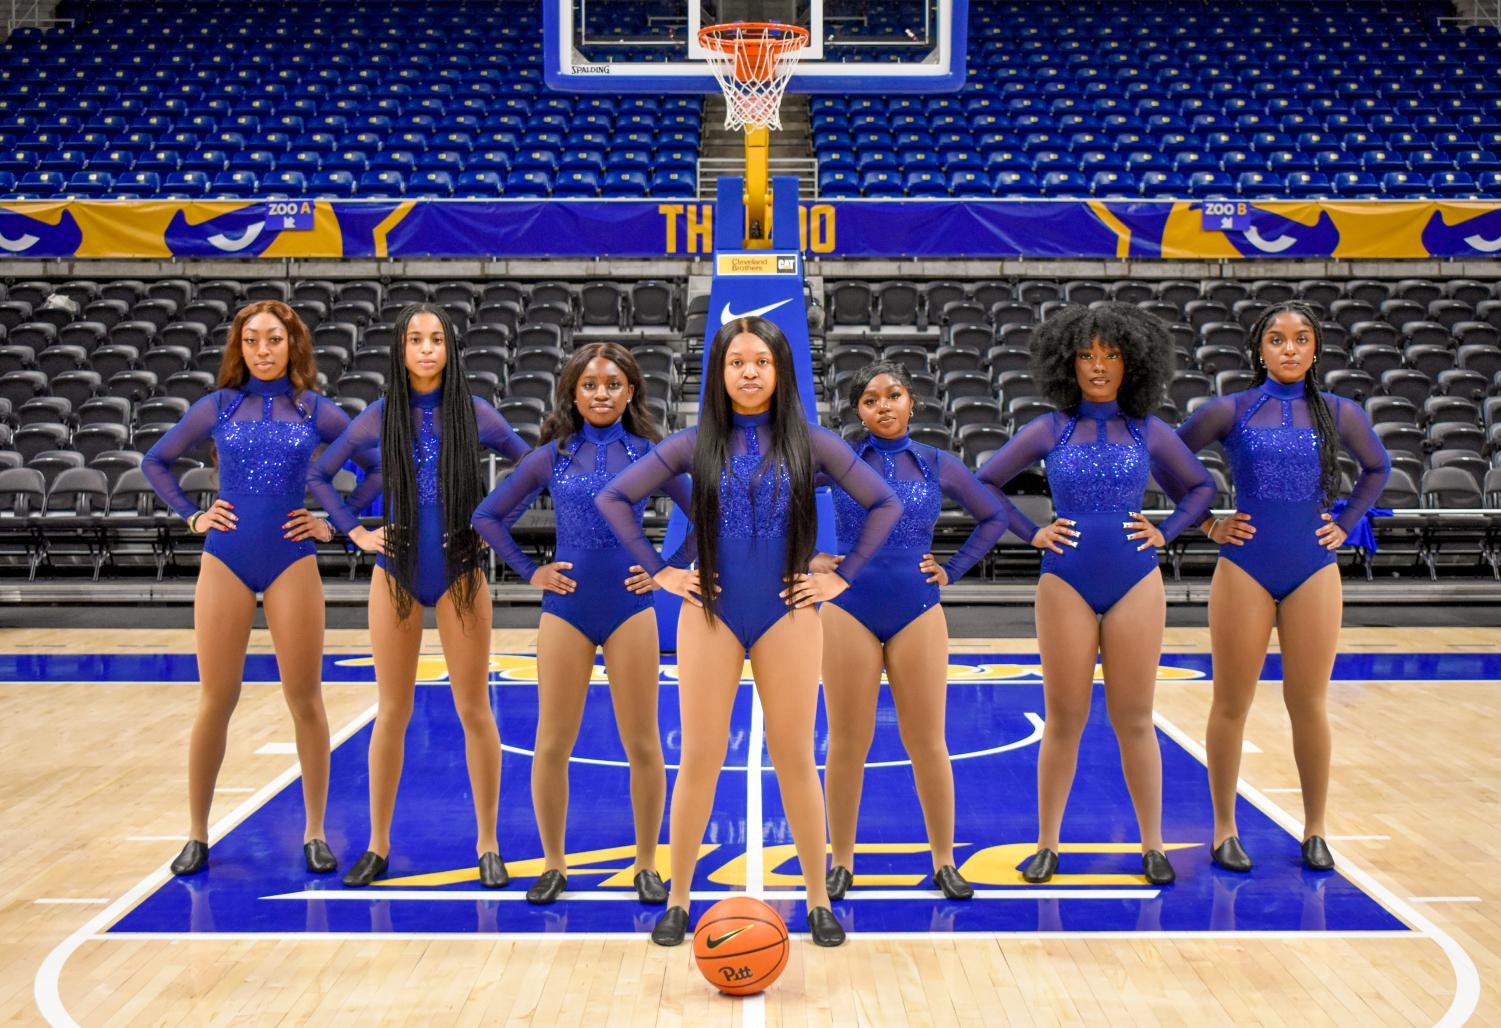 Pitt's new majorette team shares Black culture through dance - The Pitt News